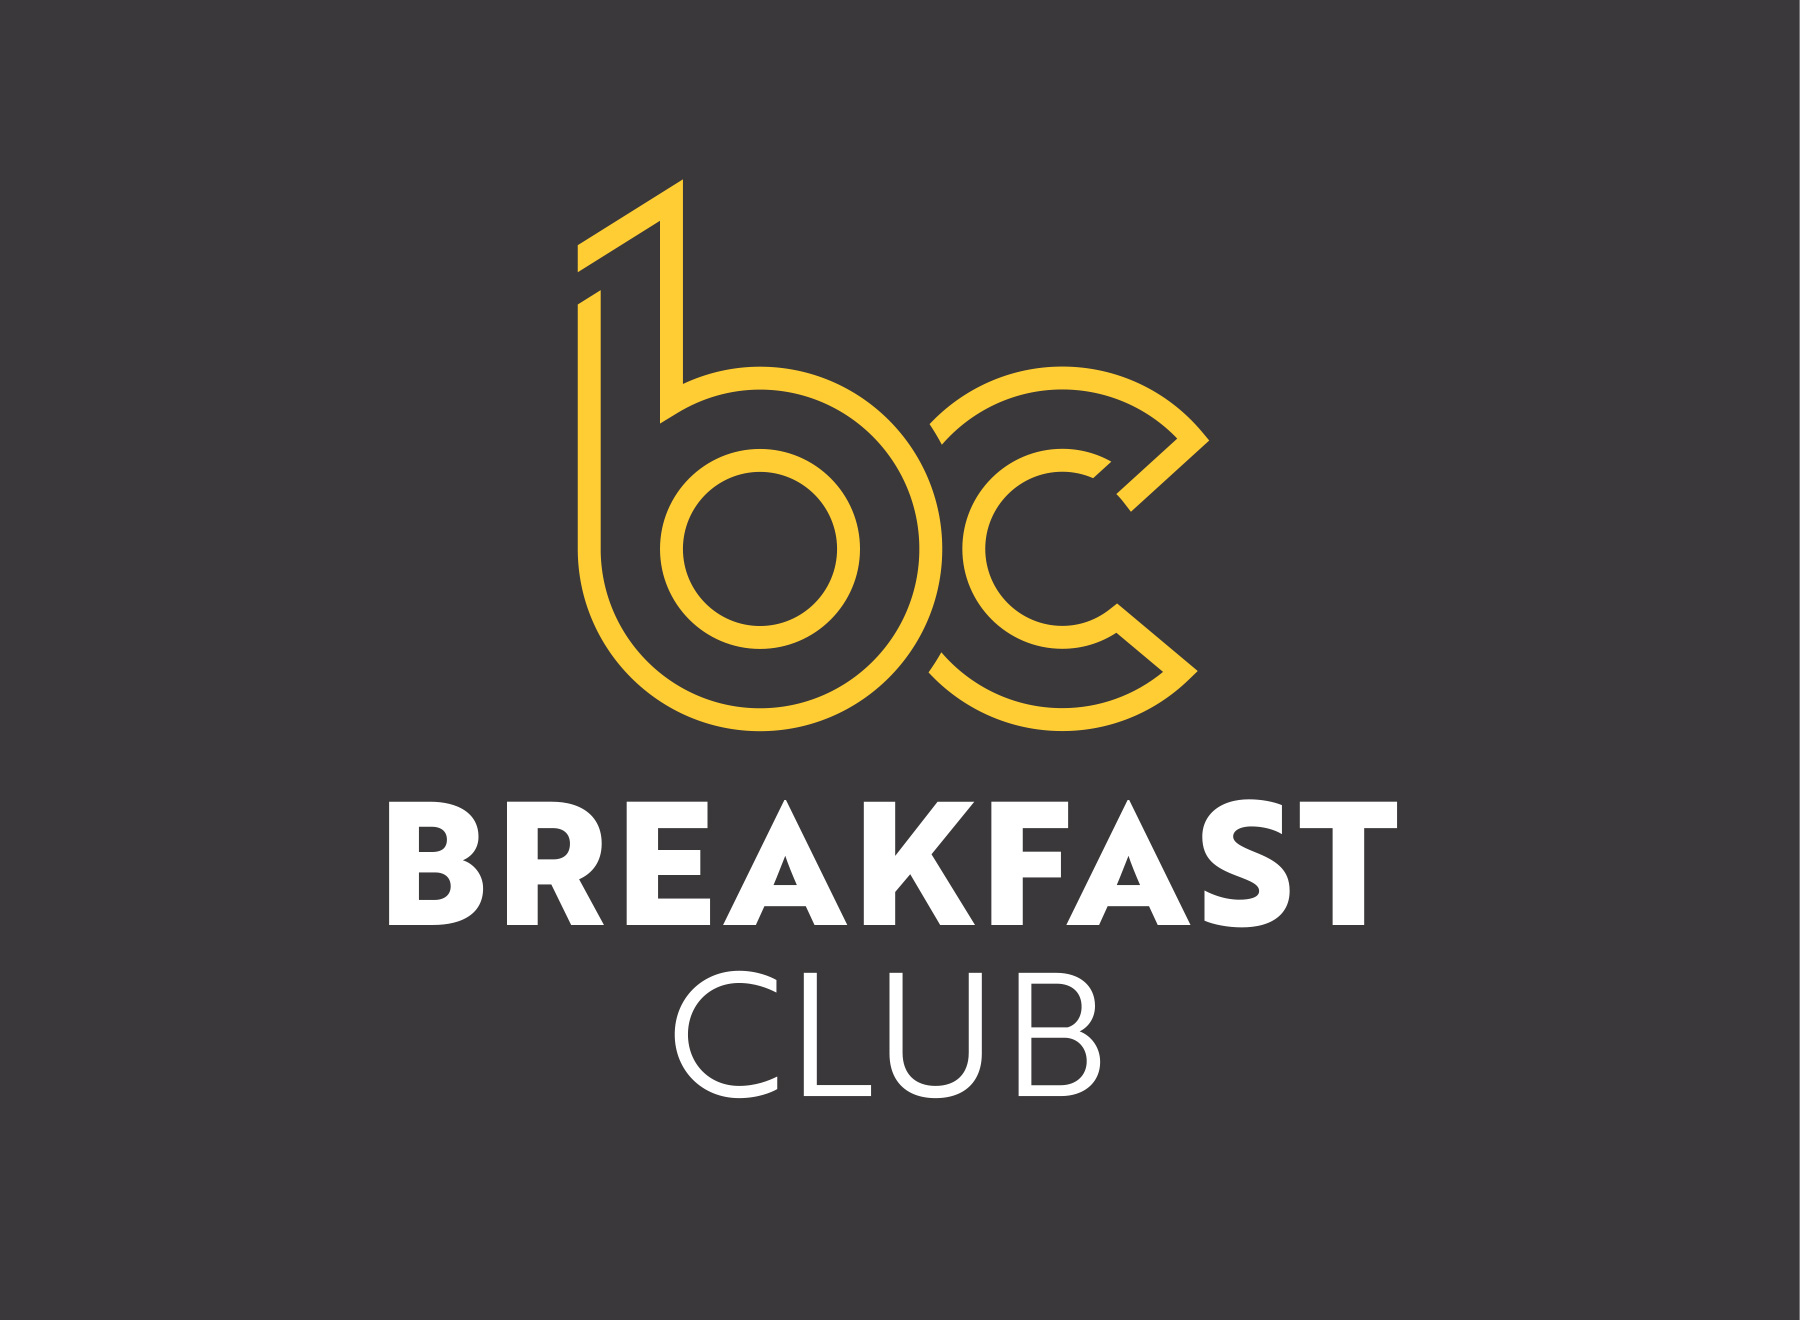 bc-logo-beforeafter-after